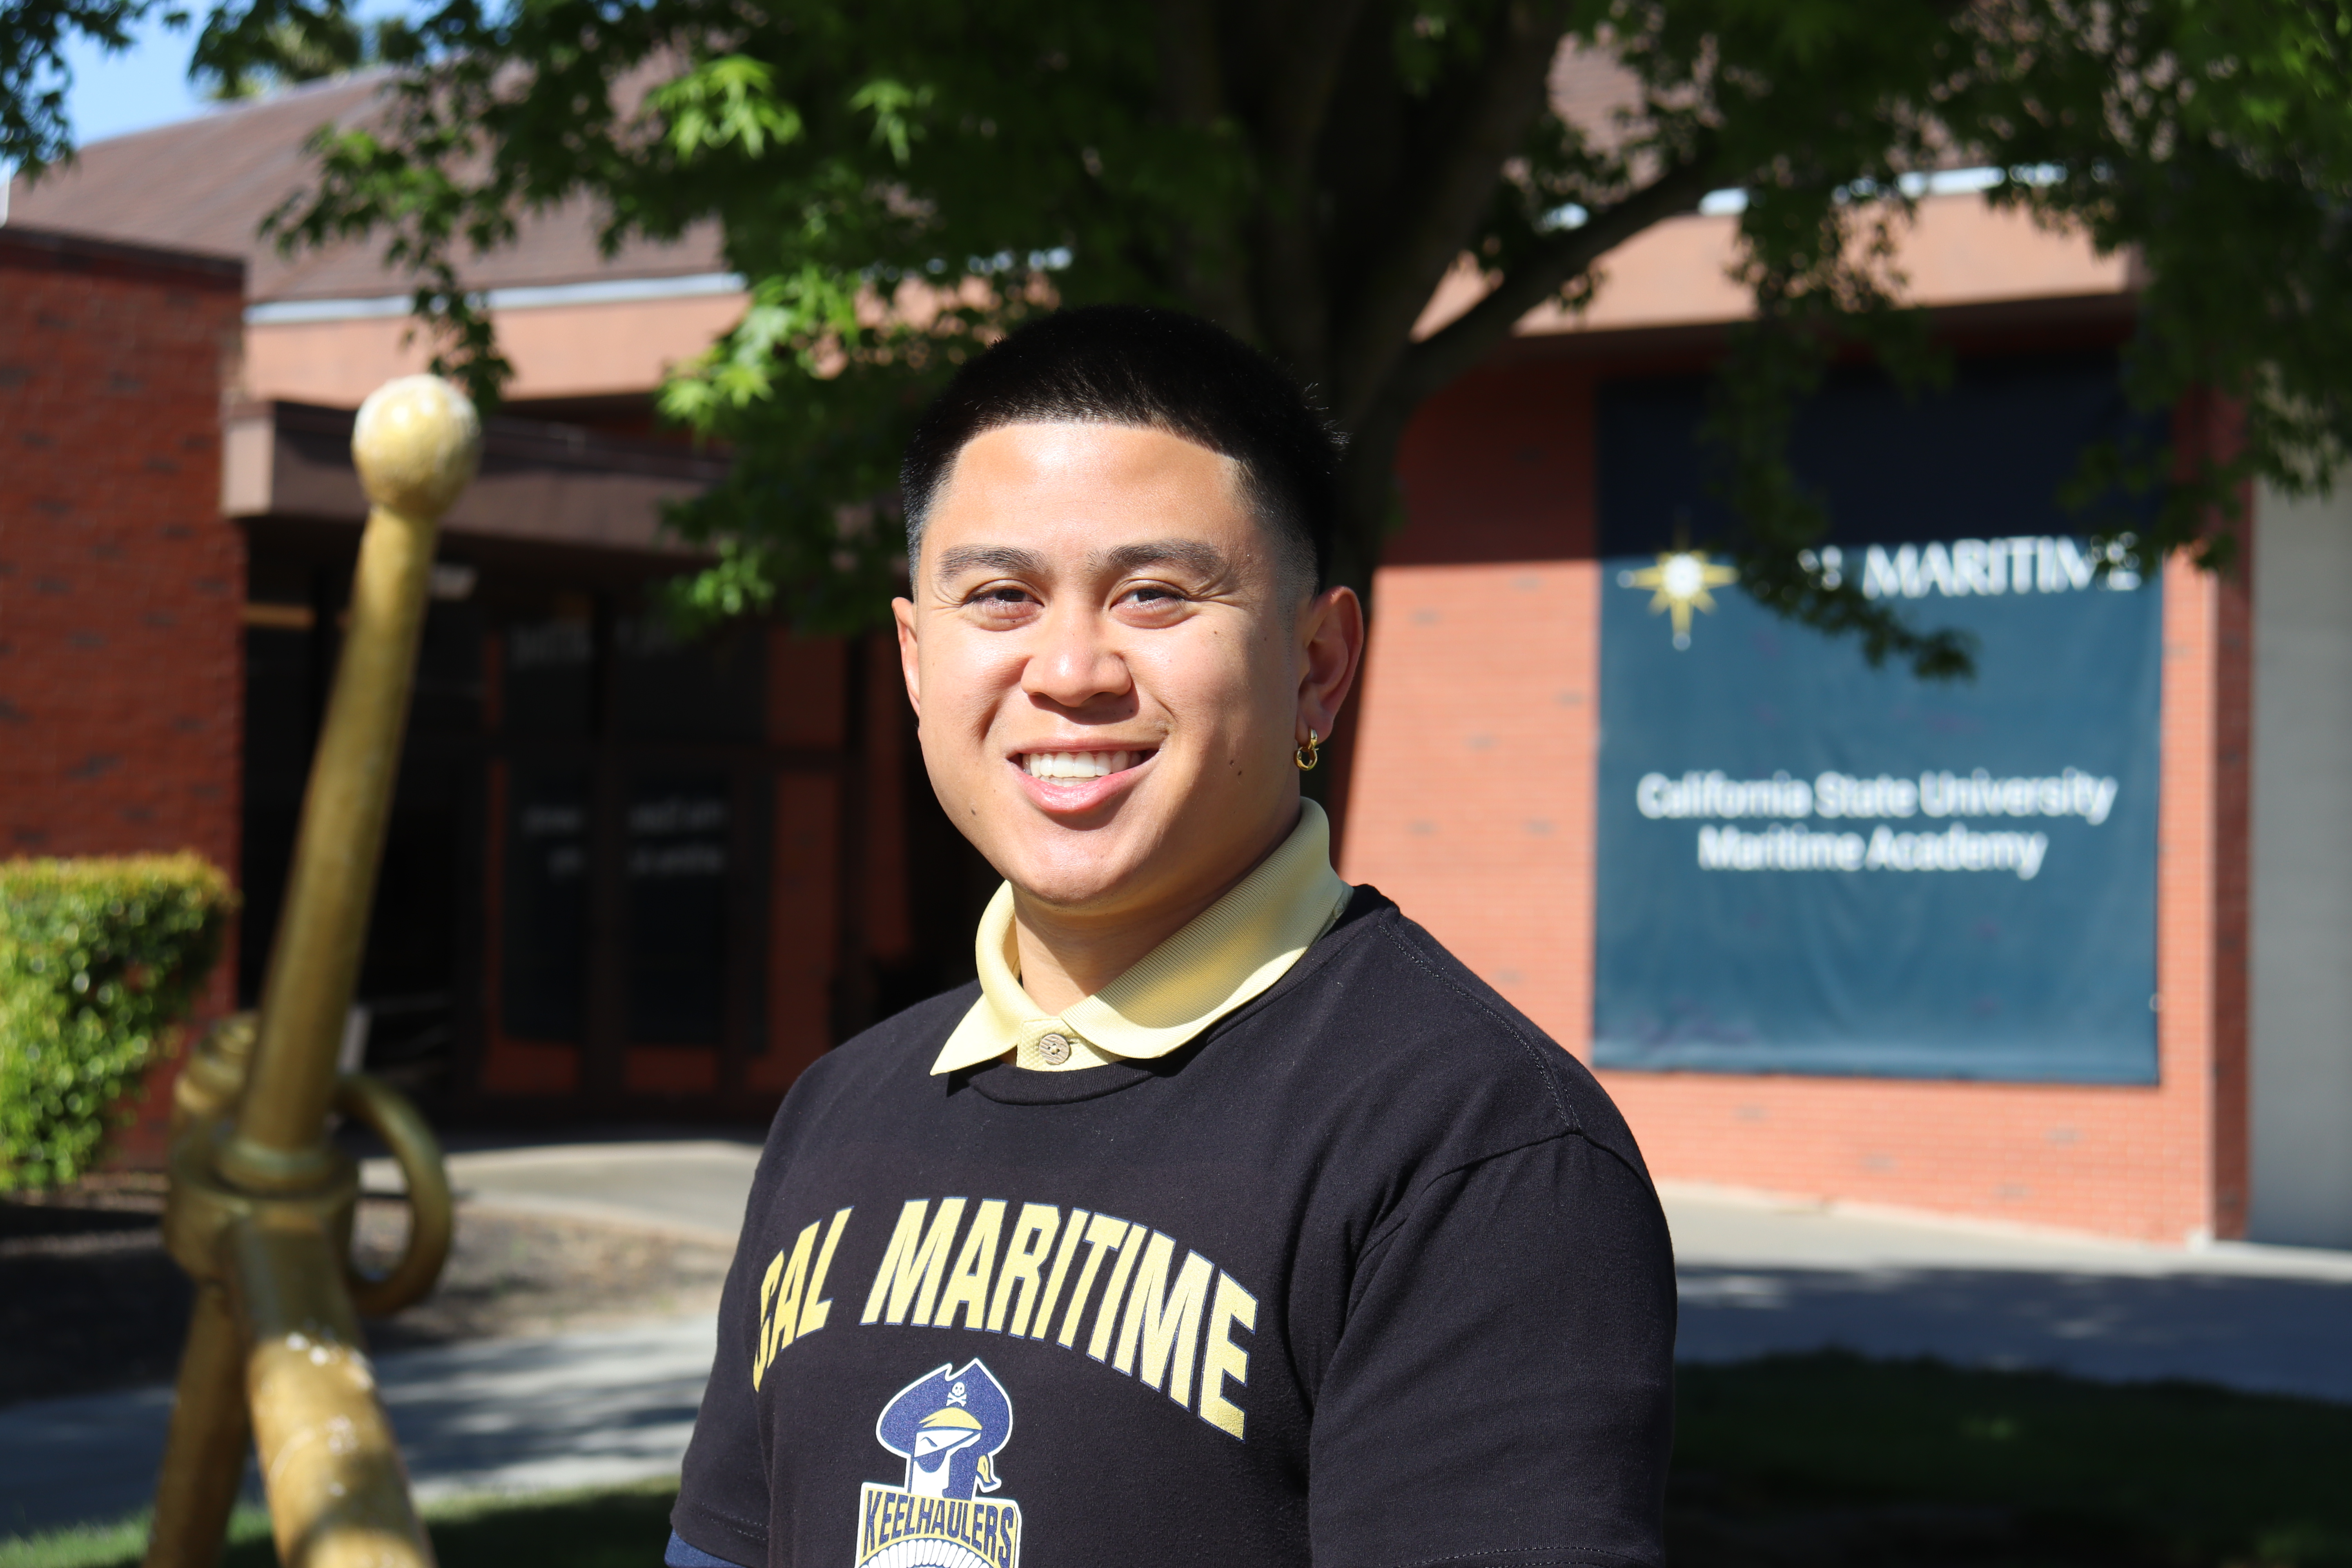 Rizal Aliga Coordinator for Sustainability at California State University Maritime Academy